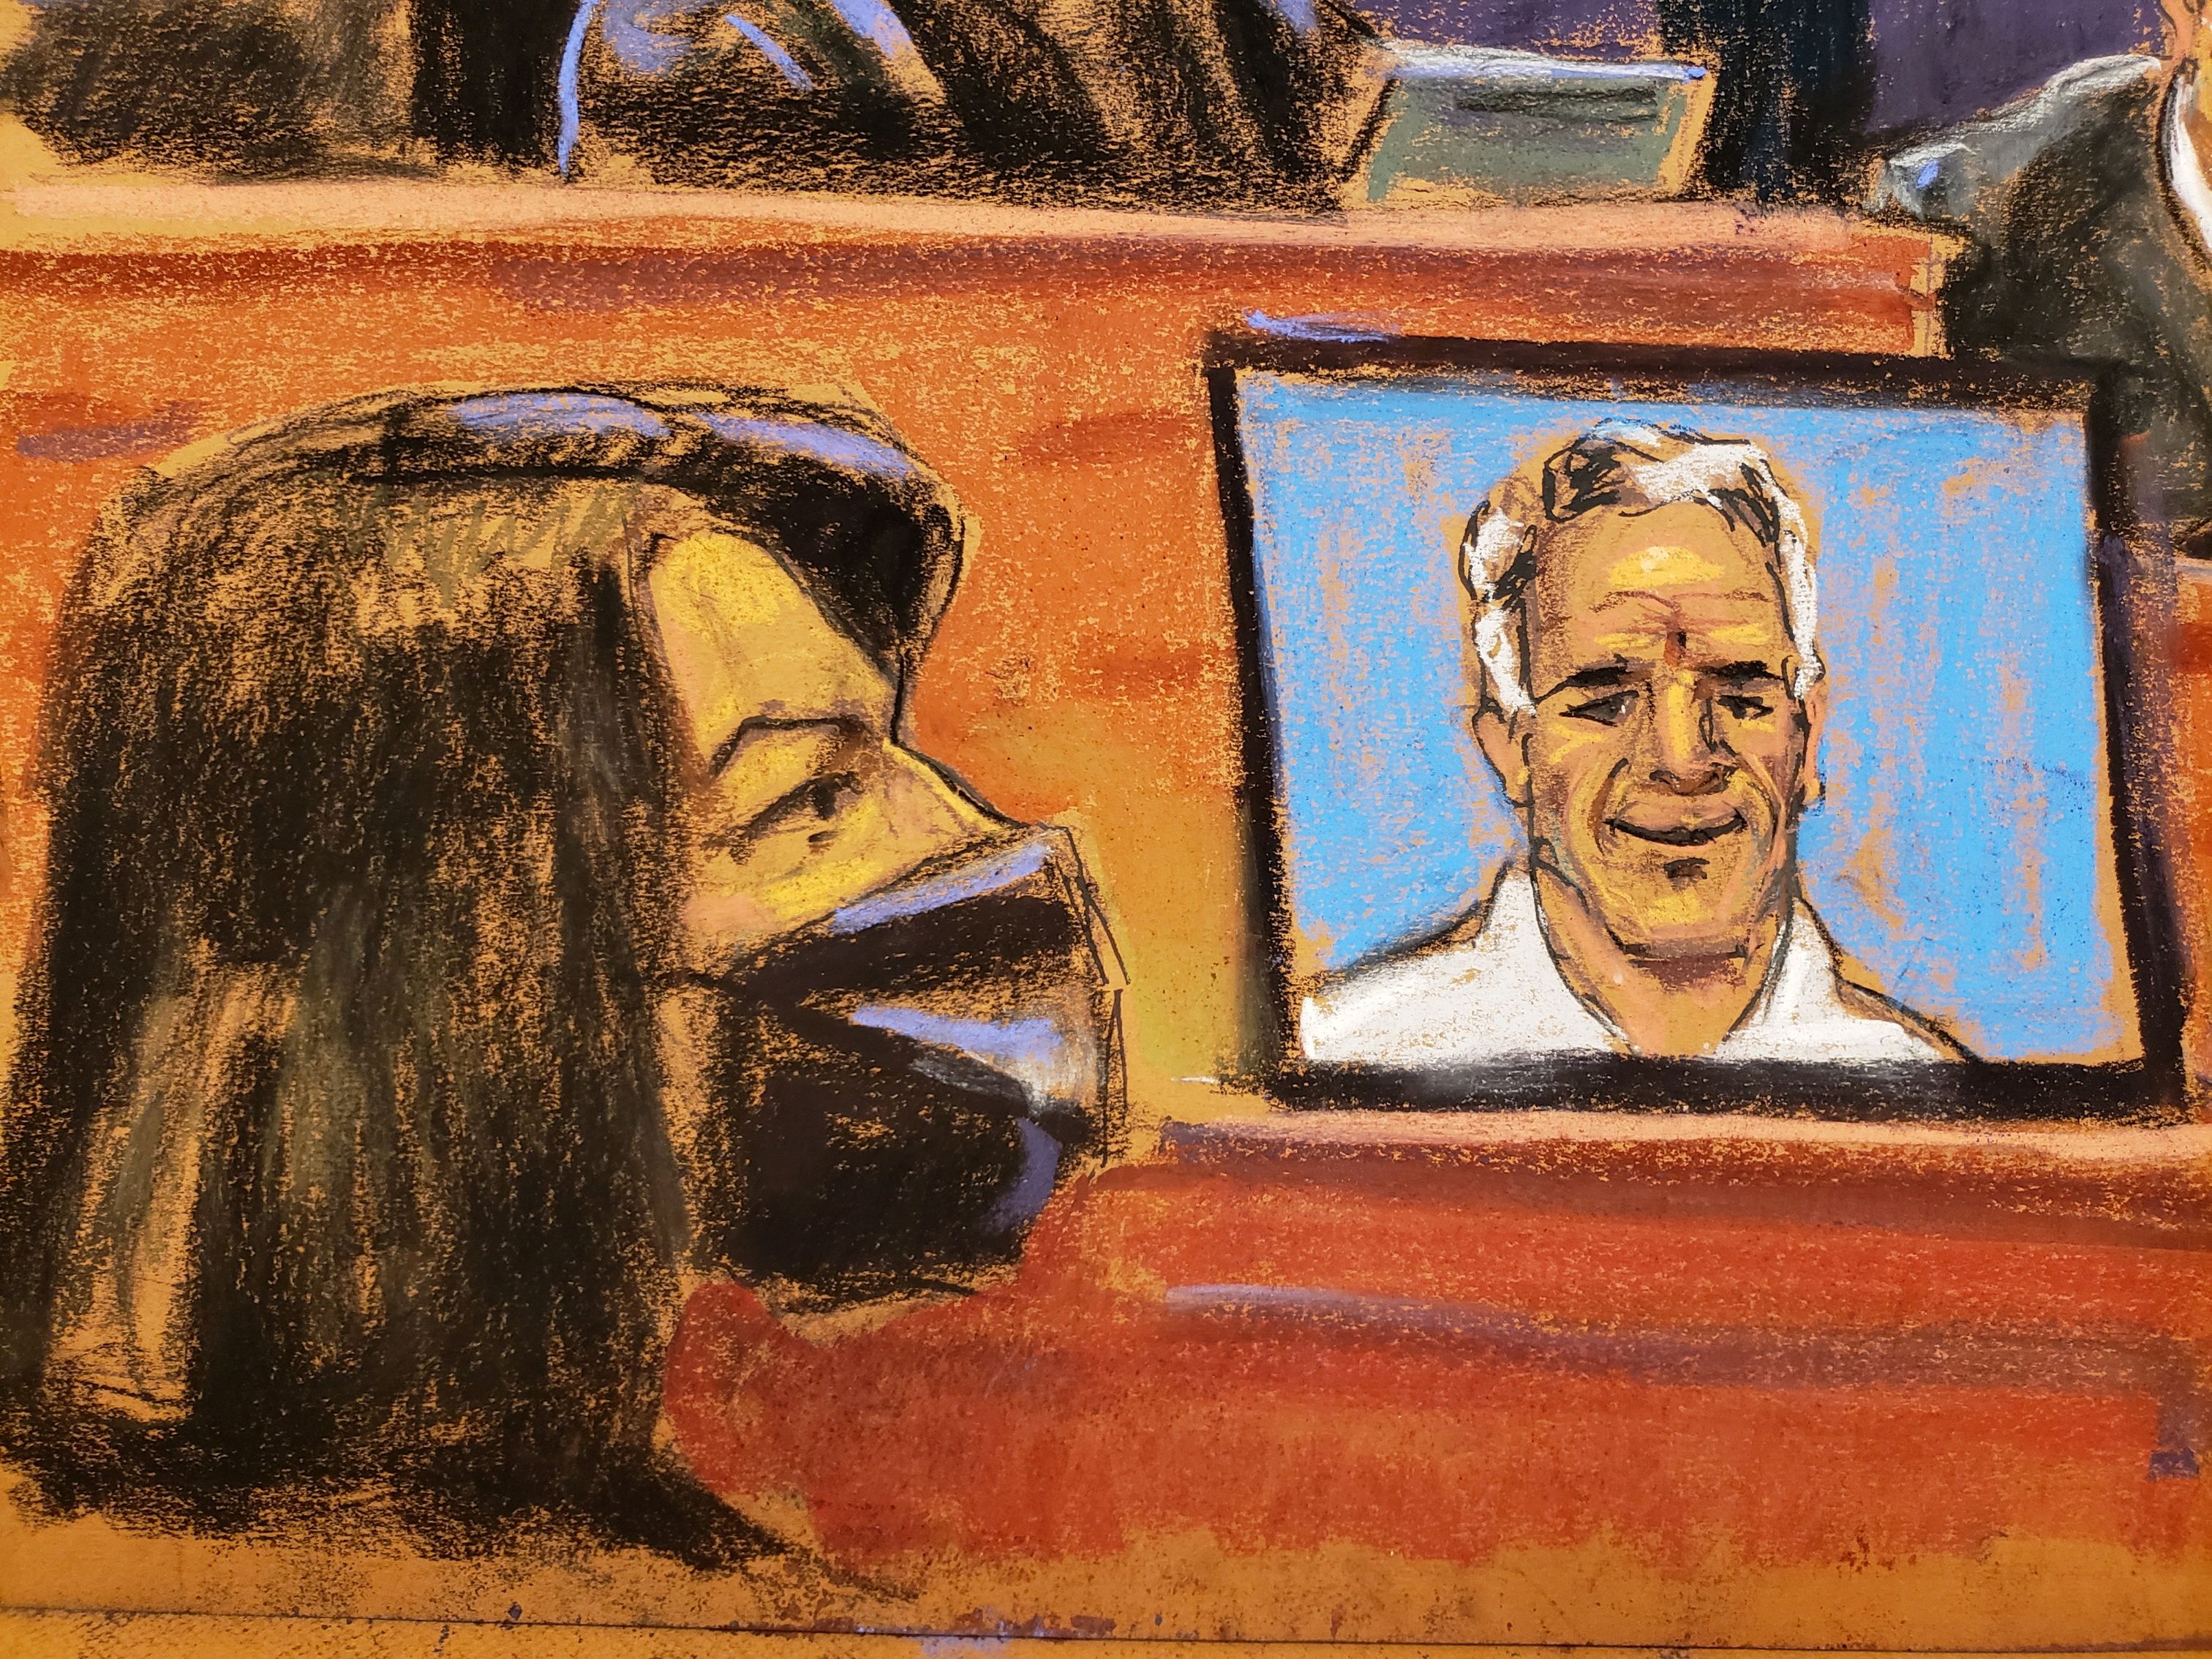 Dibujo de Ghislaine Maxwell en el juicio (REUTERS/Jane Rosenberg)